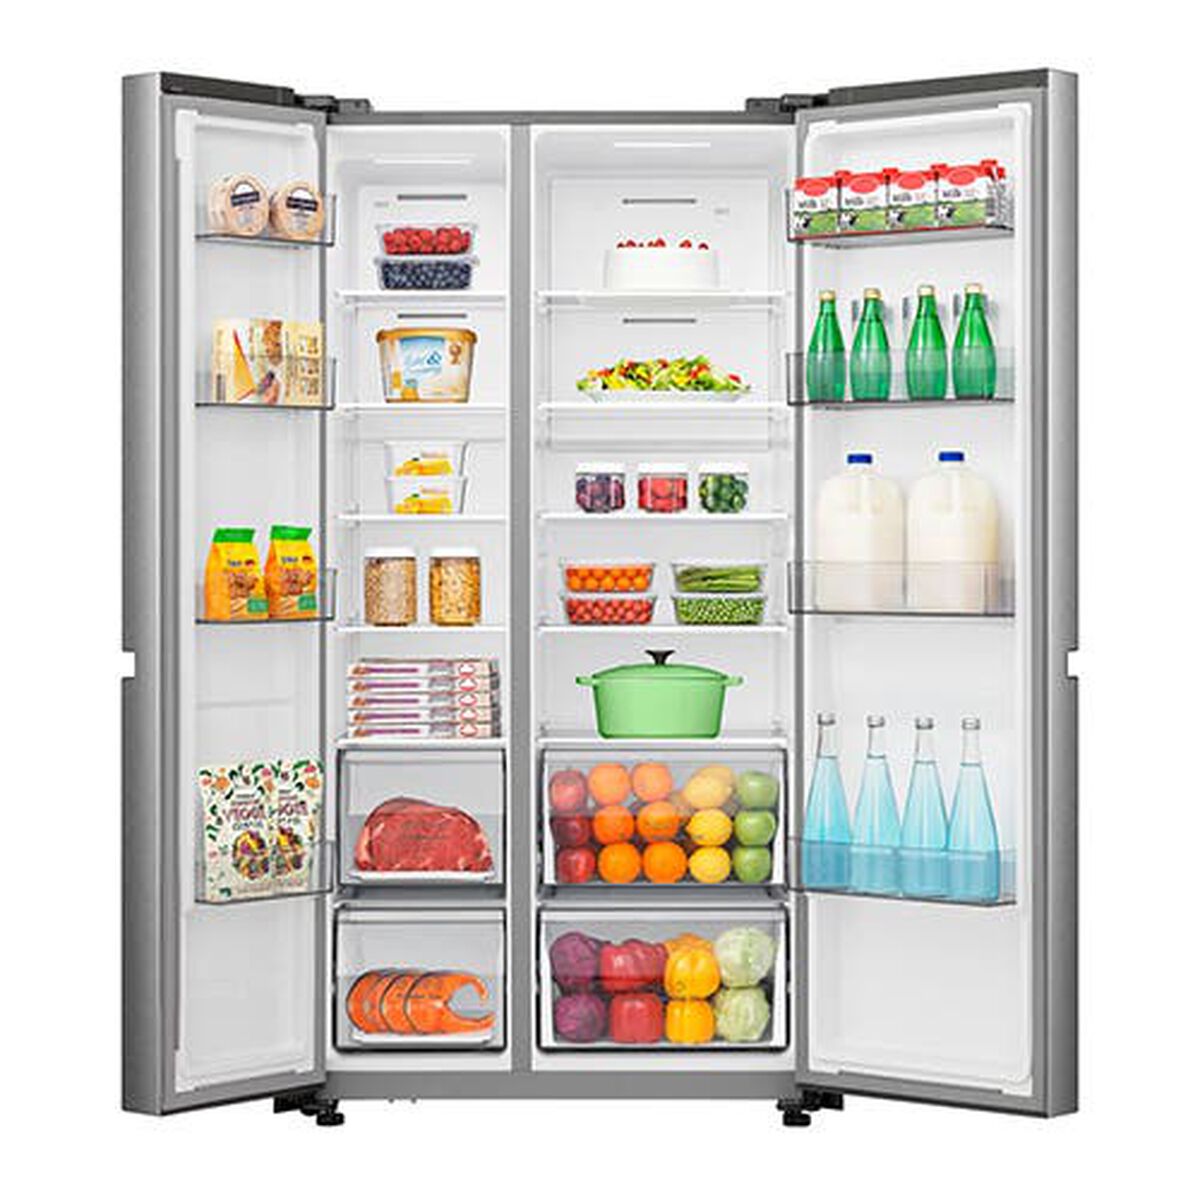 Refrigerador Side by Side Hisense RS820NV 635 lts.